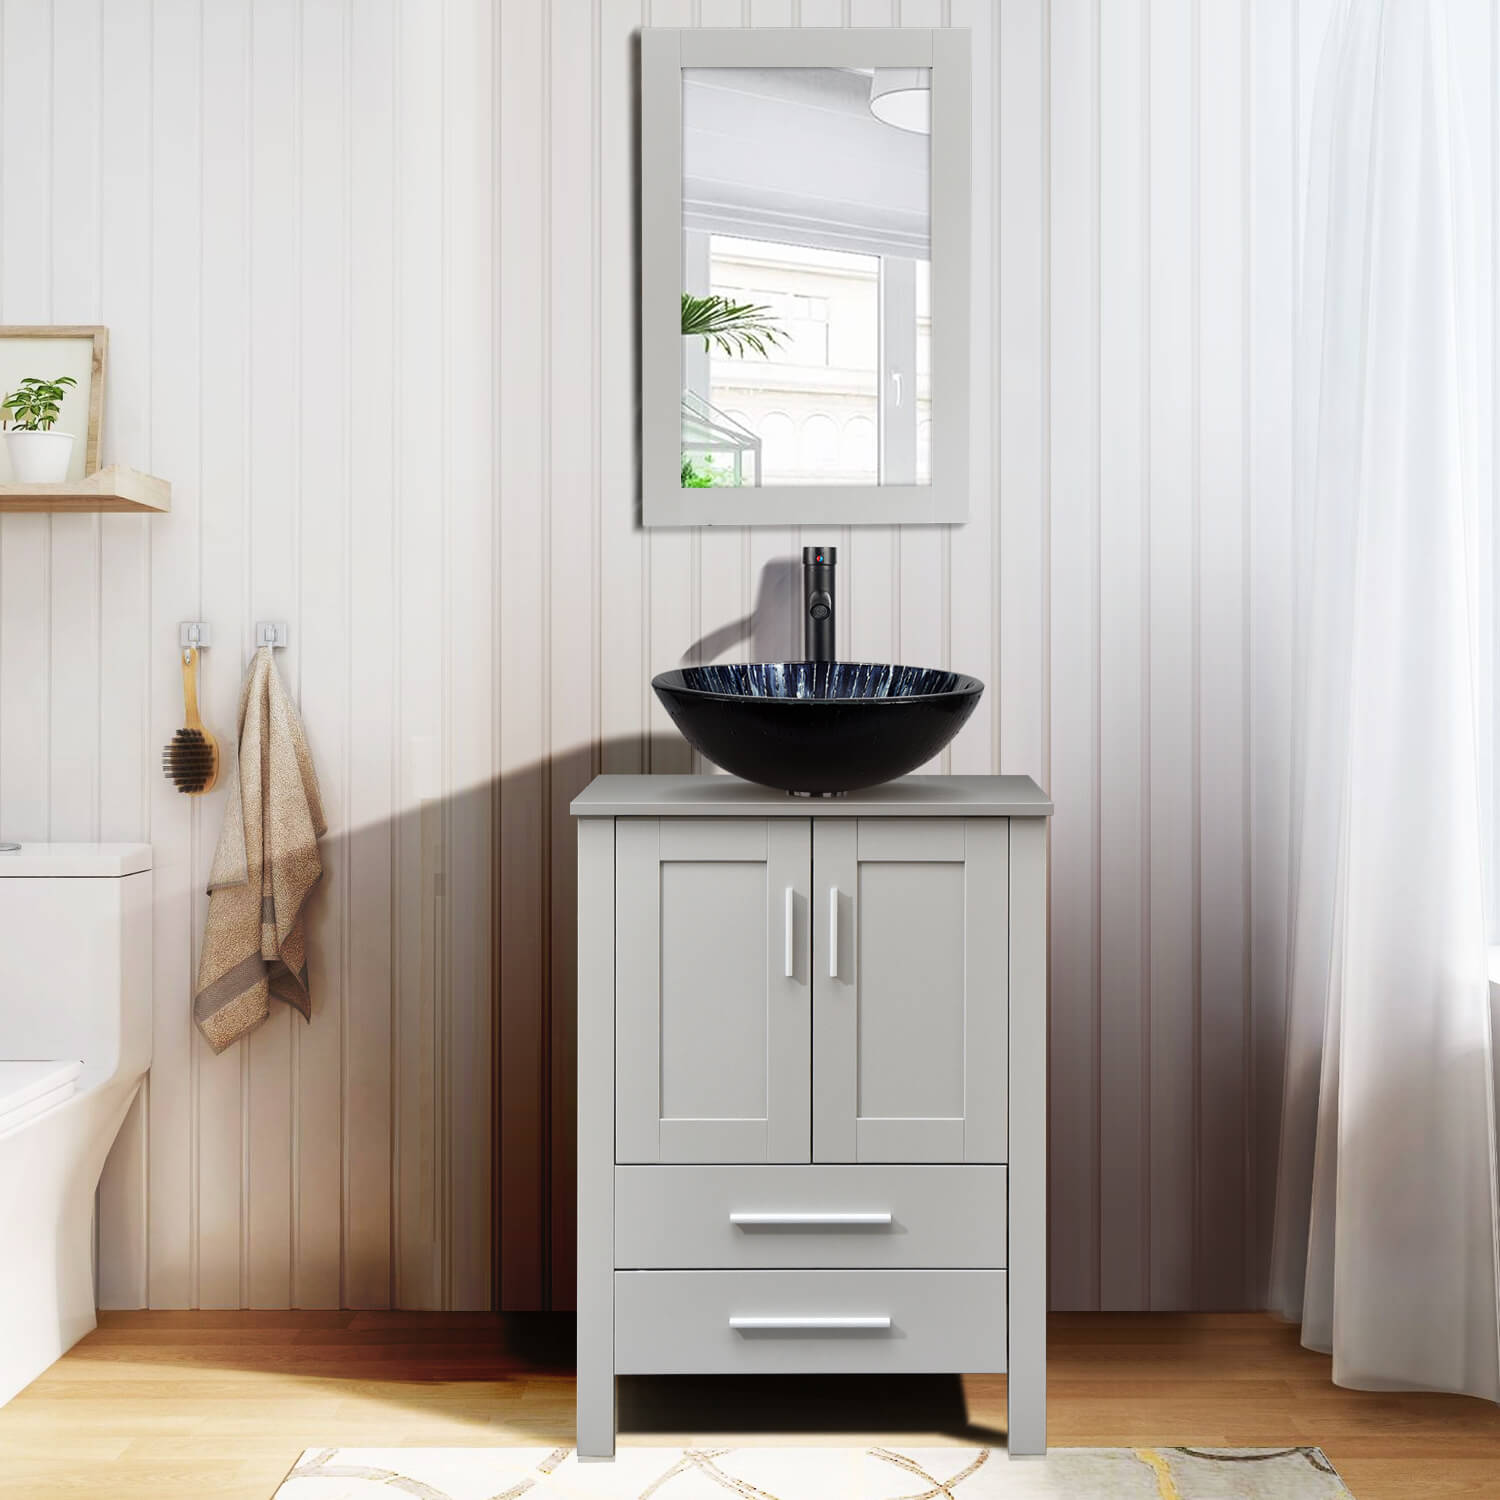 Elecwish gray wood bathroom vanity with patterened round sink in bathroom